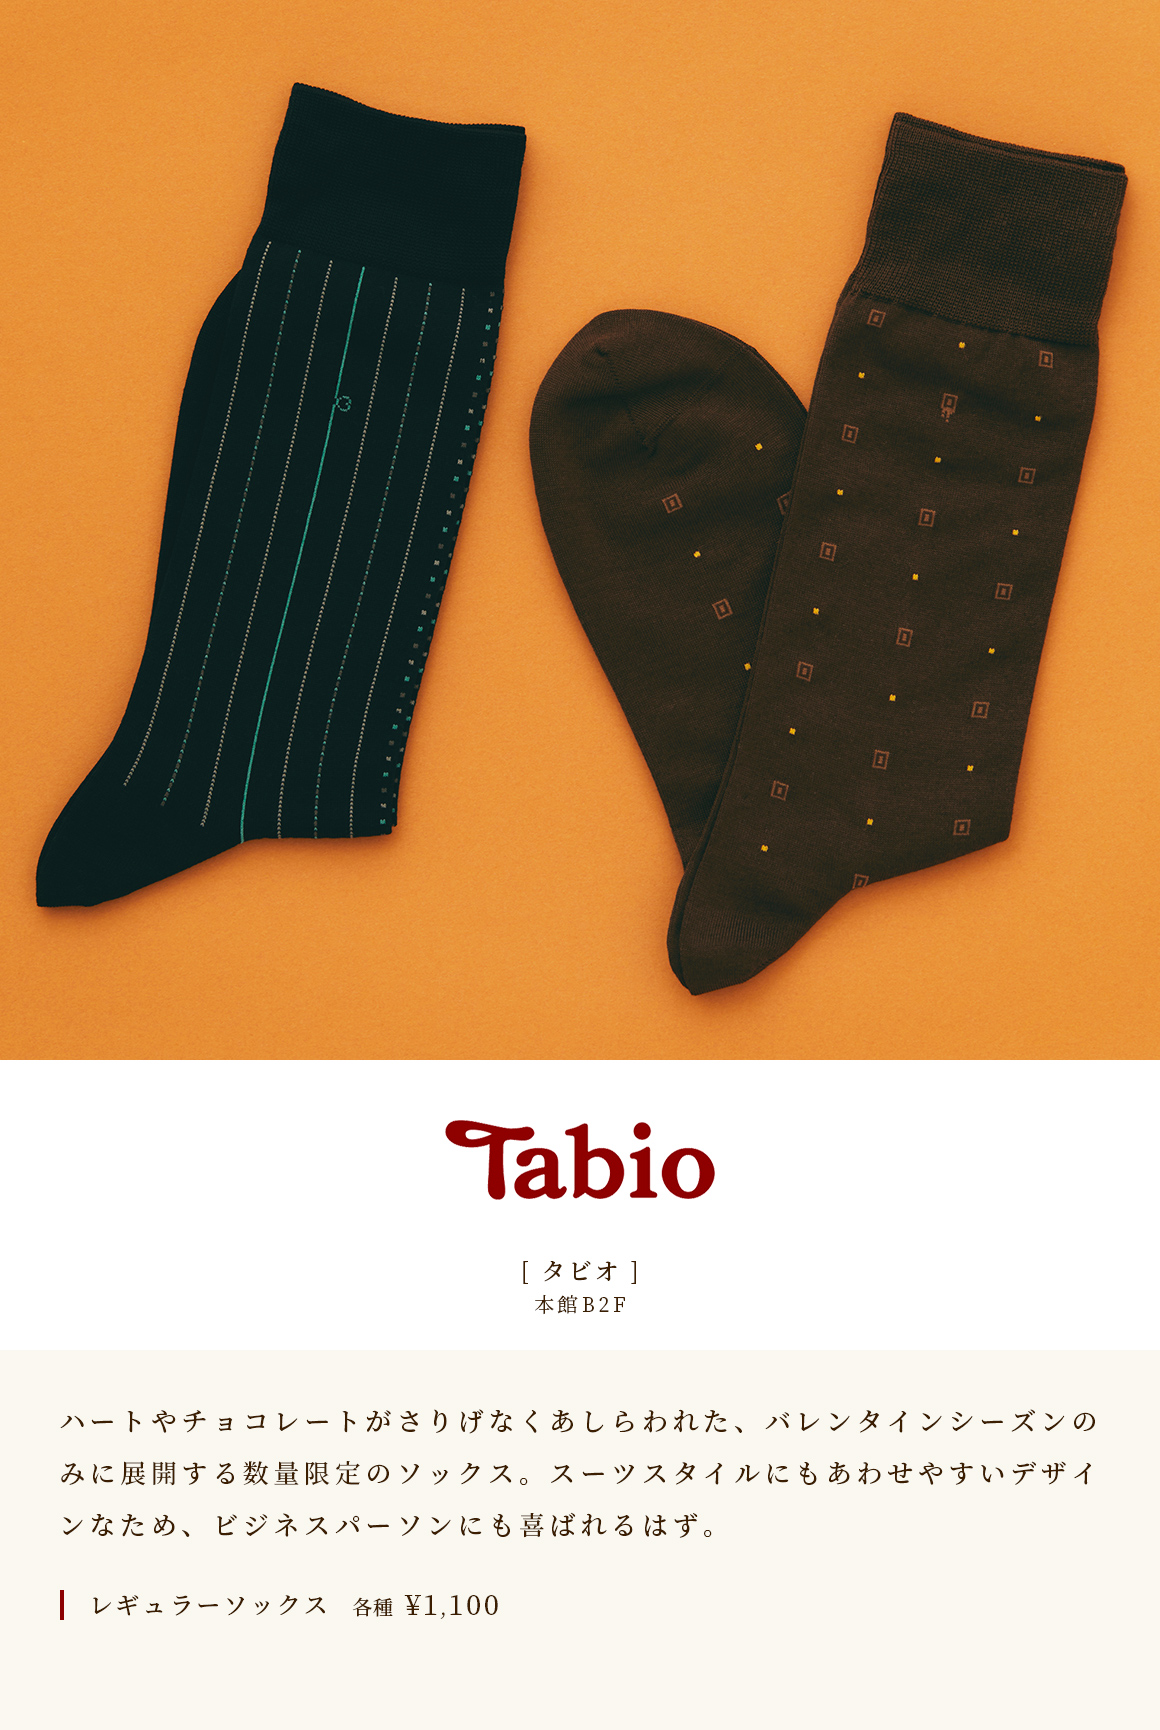 [Tabio] Main Building B2F 情人节限定的爱心袜子和巧克力限定商品。设计易于搭配西装款式，值得商务人士欣赏。各种普通袜子￥1,100